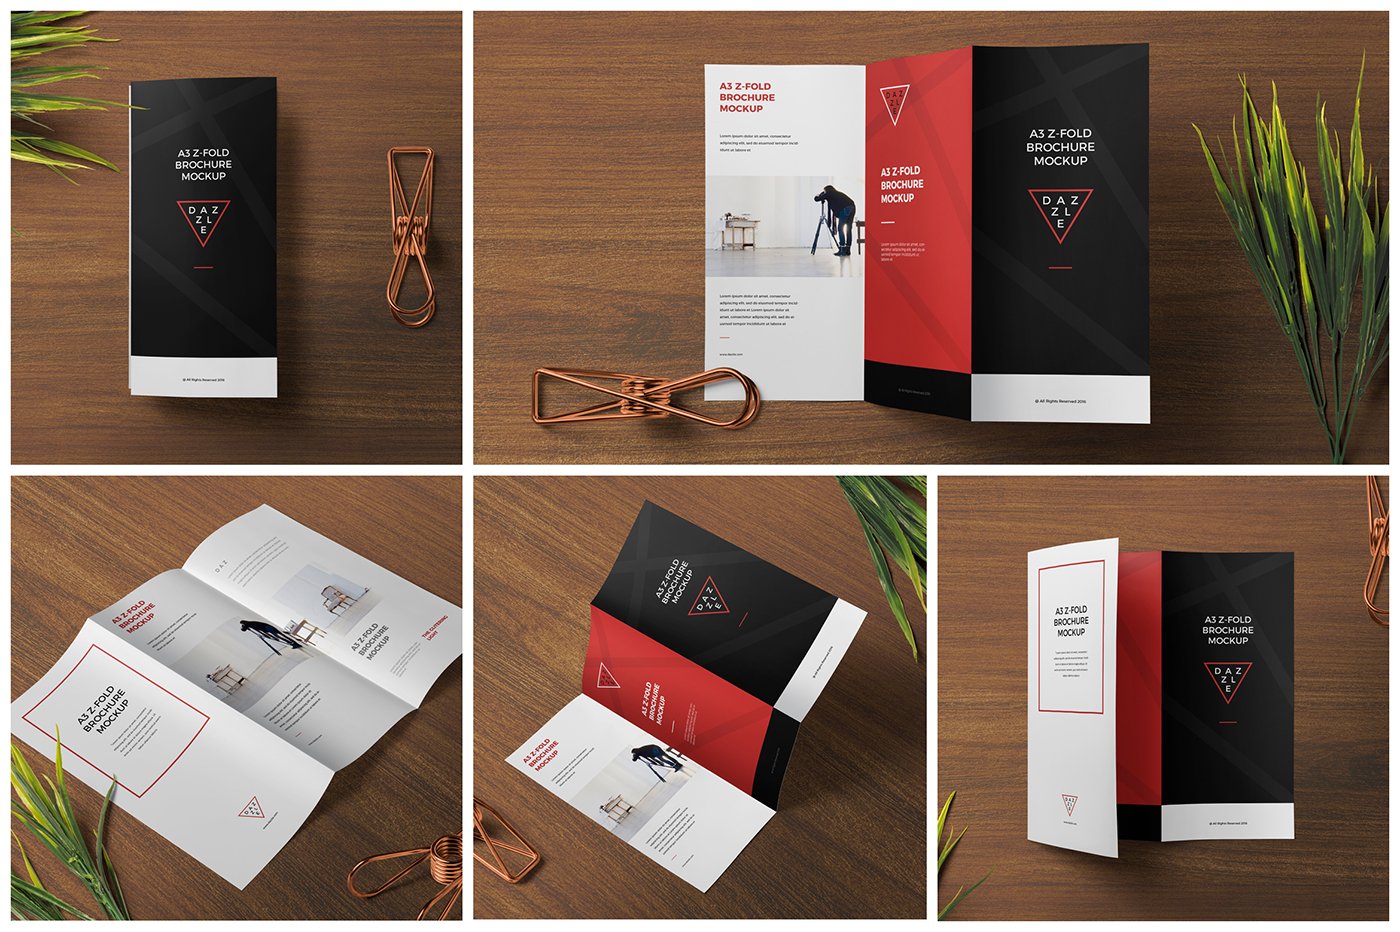 A3 Z Fold Brochure Mockups cover image.